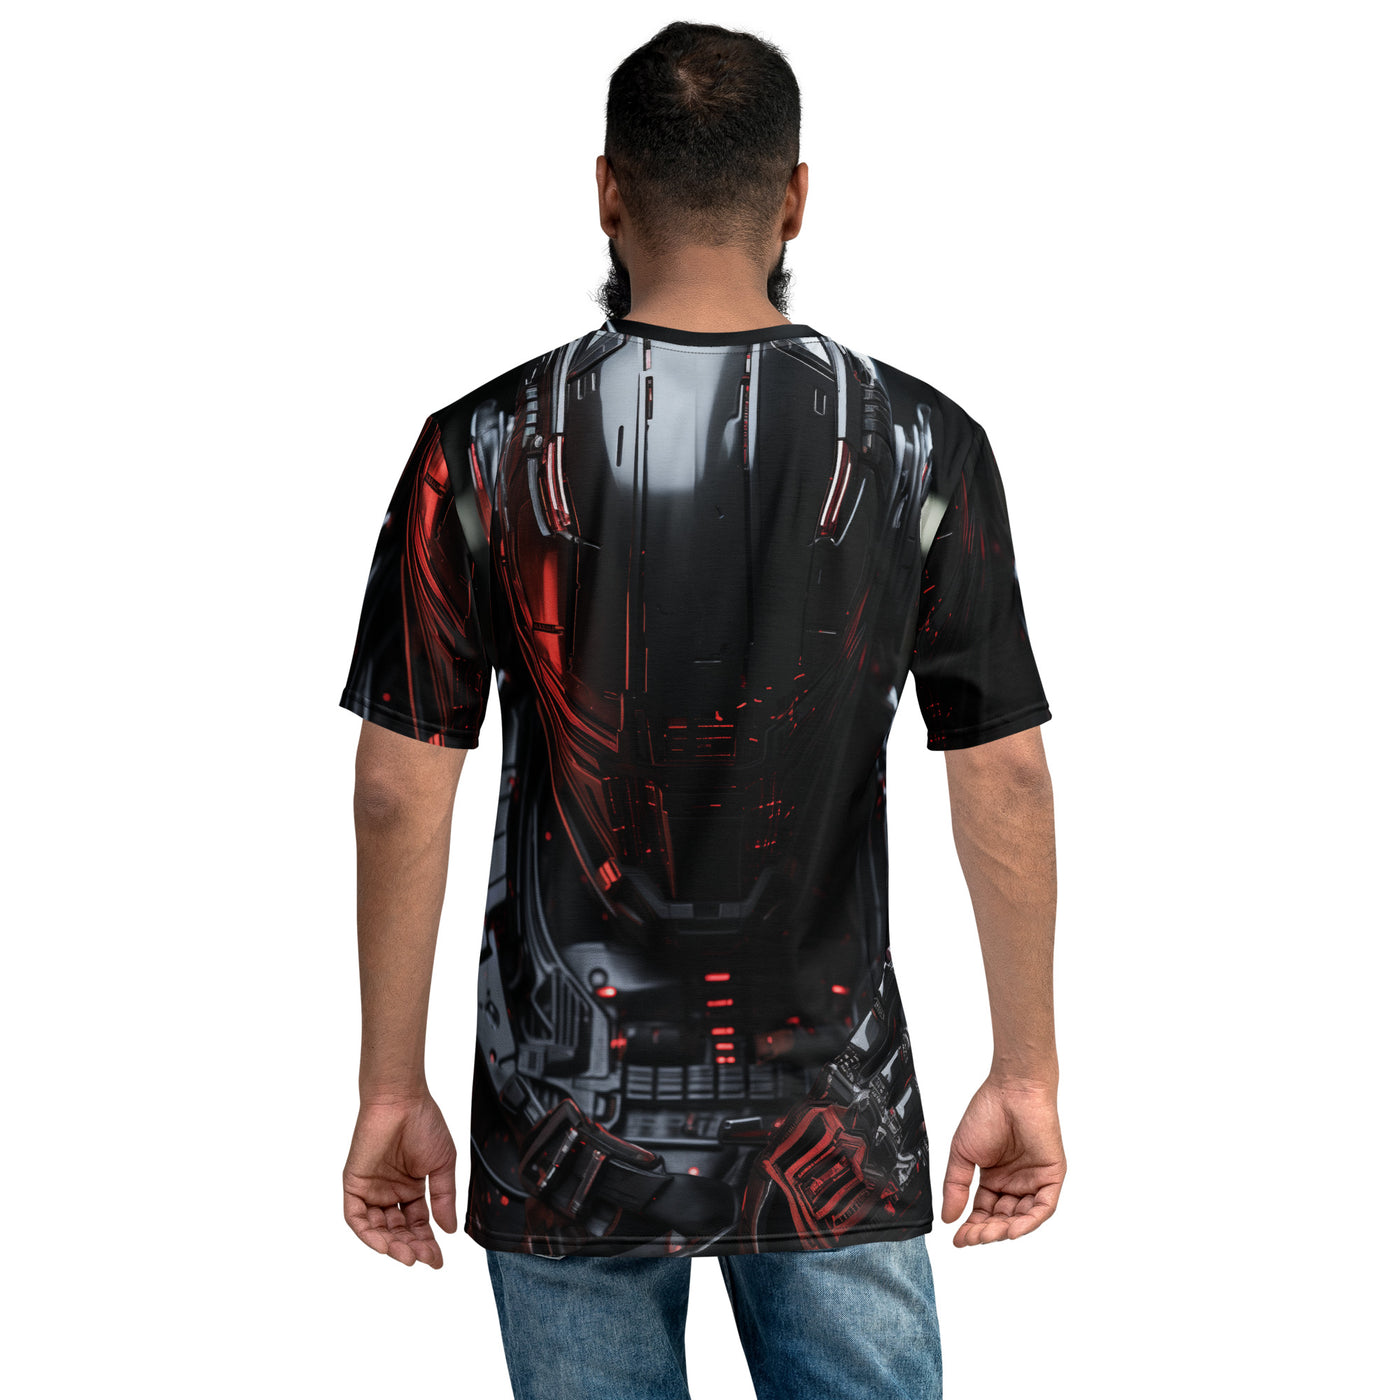 CyberArms Warrior V2 - Men's t-shirt